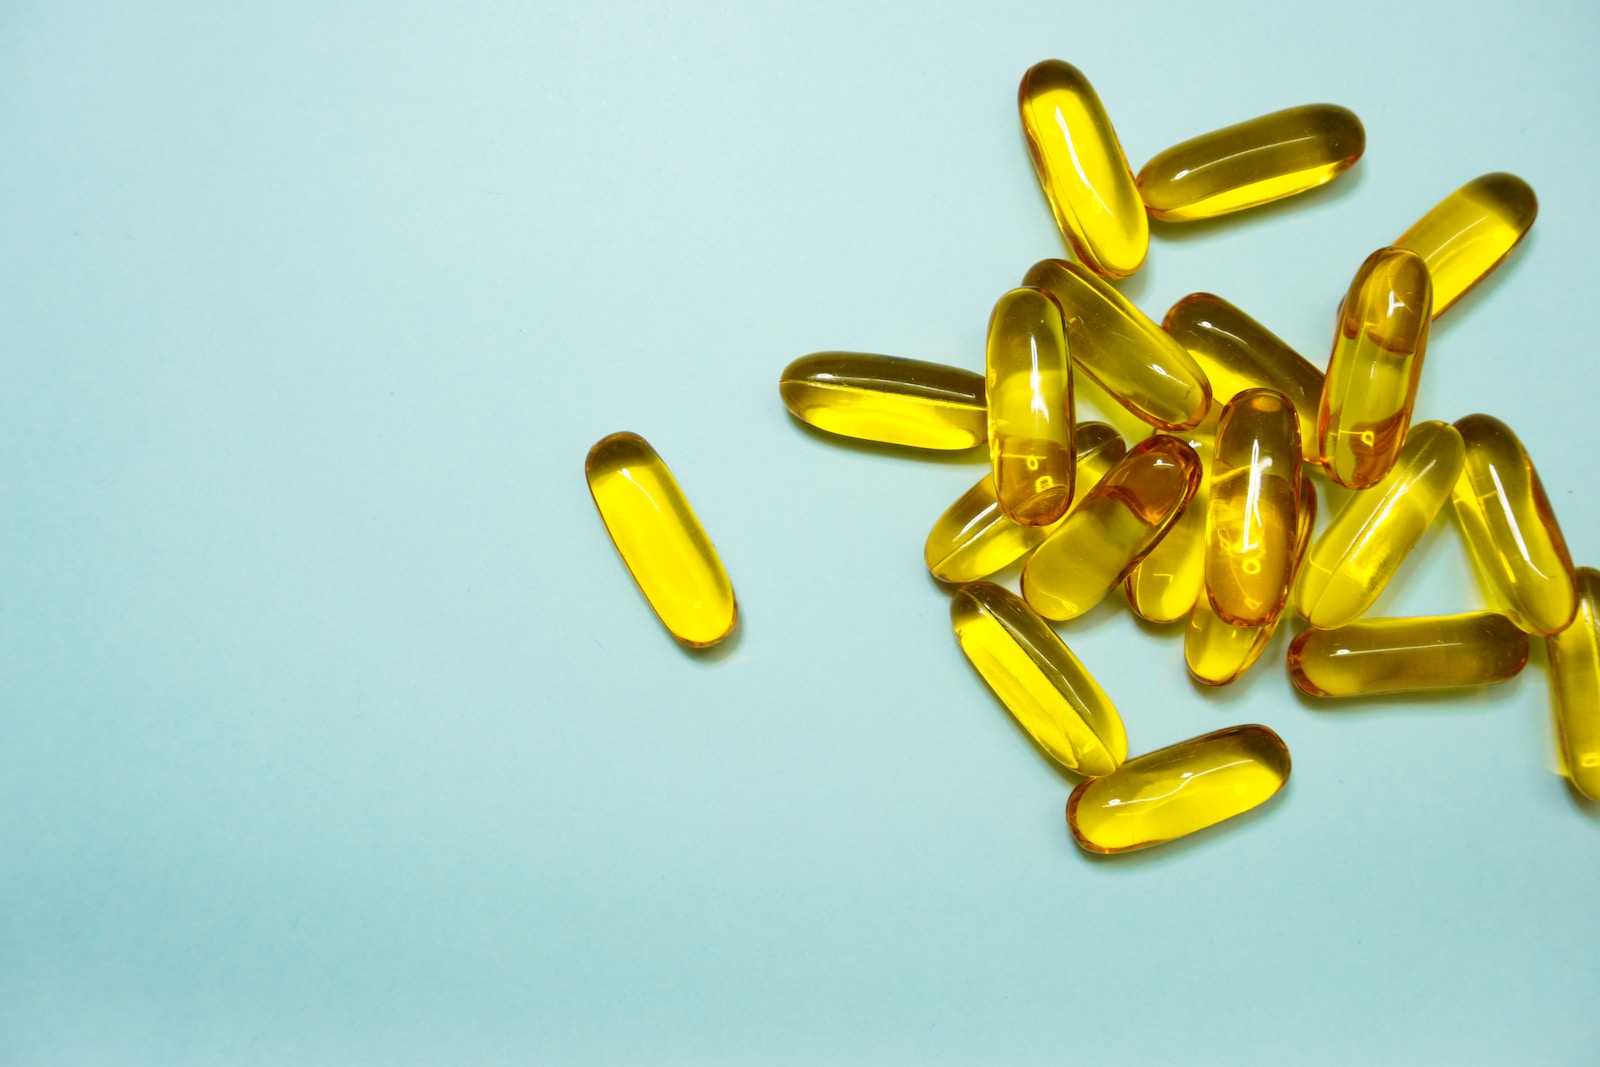 Sleeping pills Kratom capsules brown and yellow medication tablets